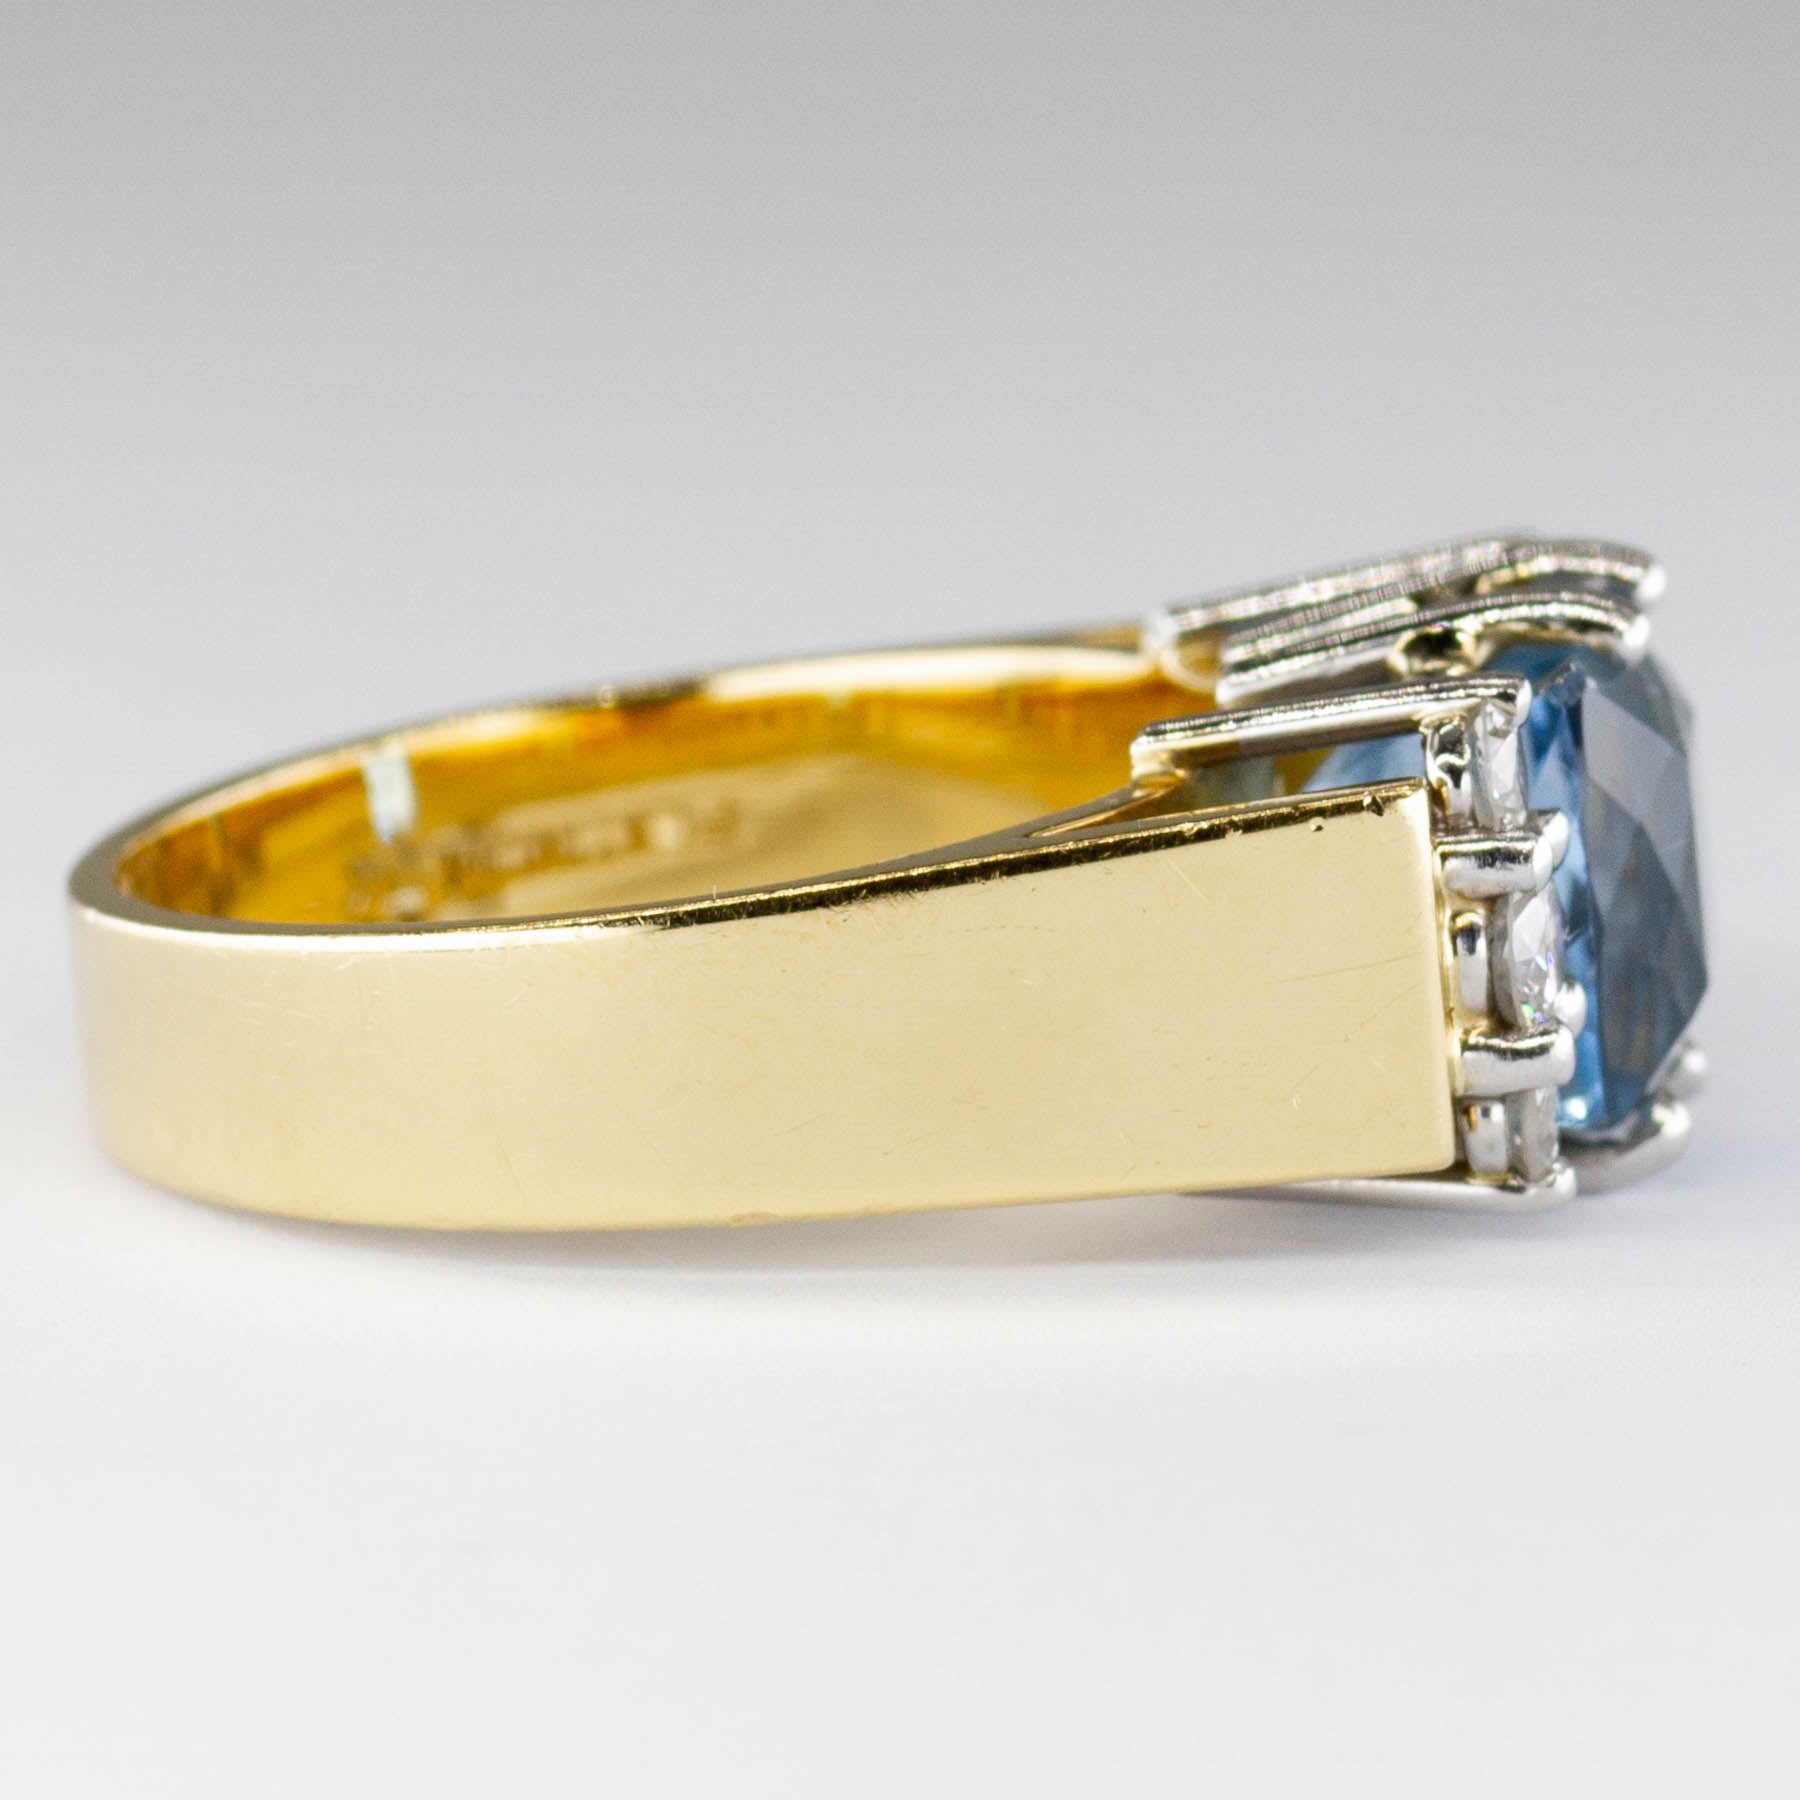 'Cavelti' Aquamarine and Diamond 18K and Platinium Ring | 2.0ct | 0.38ctw | SZ 6.75 - 100 Ways